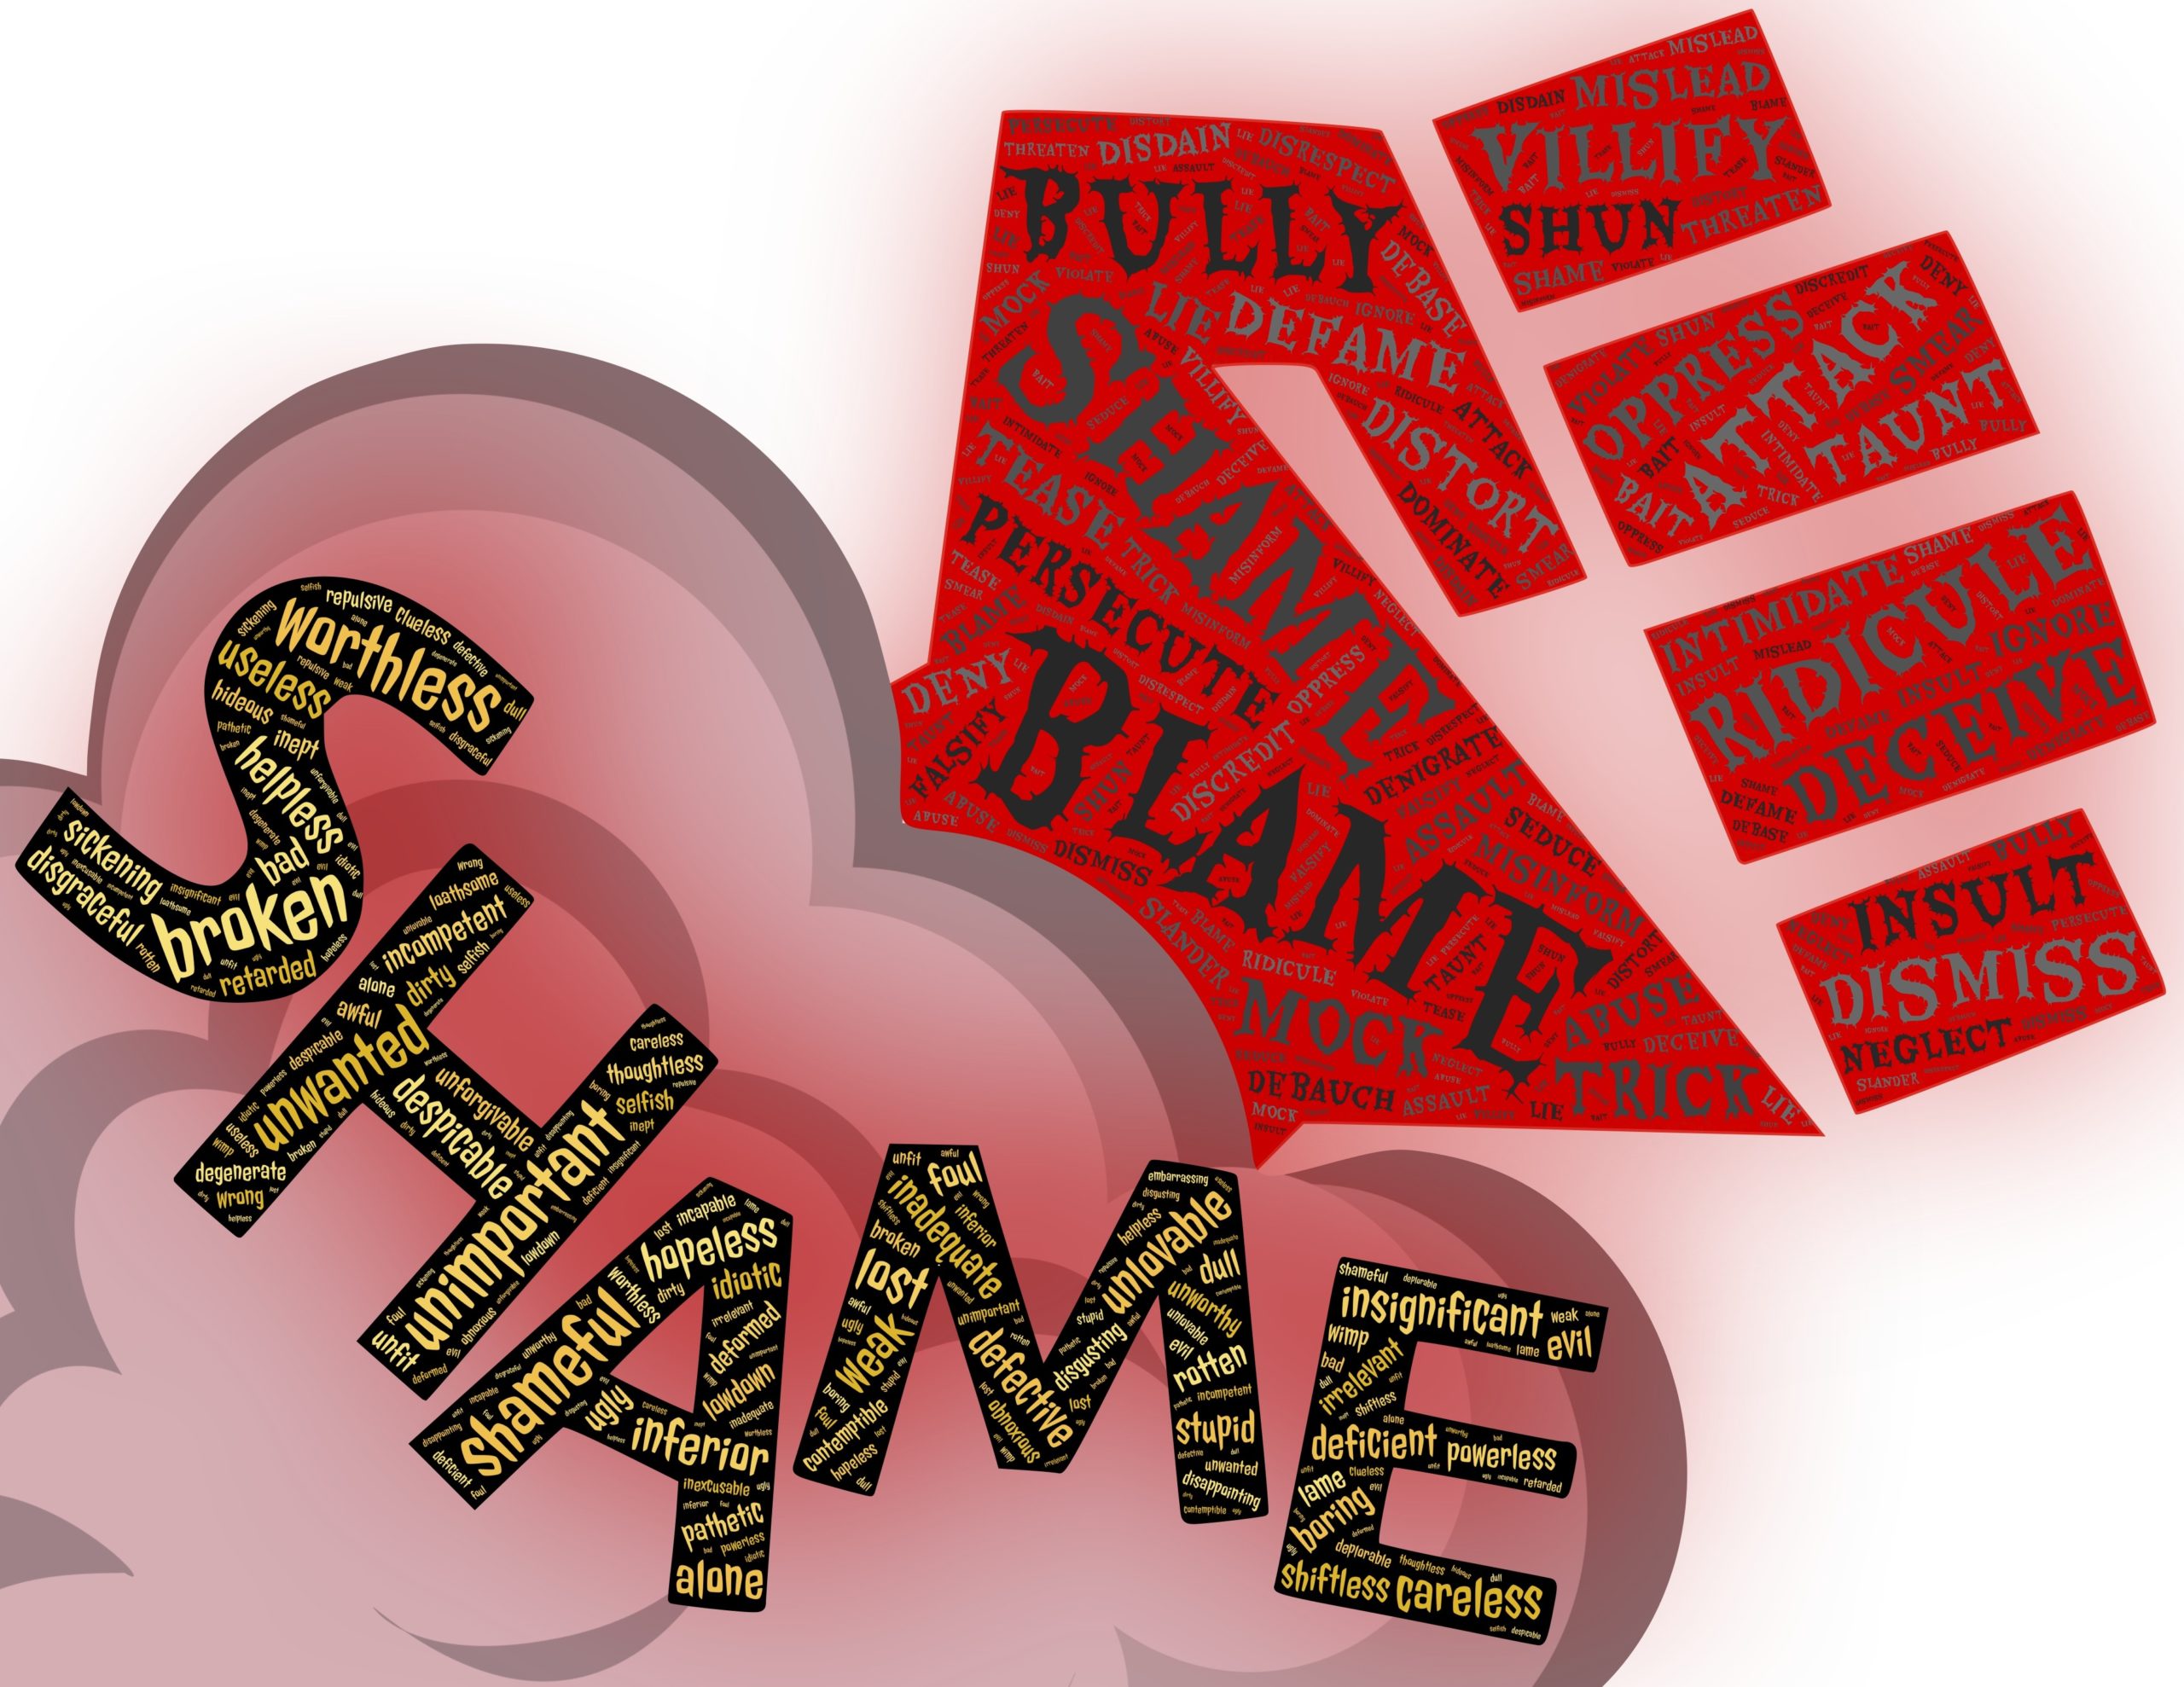 toxic grandparents, shame, blame, bullying